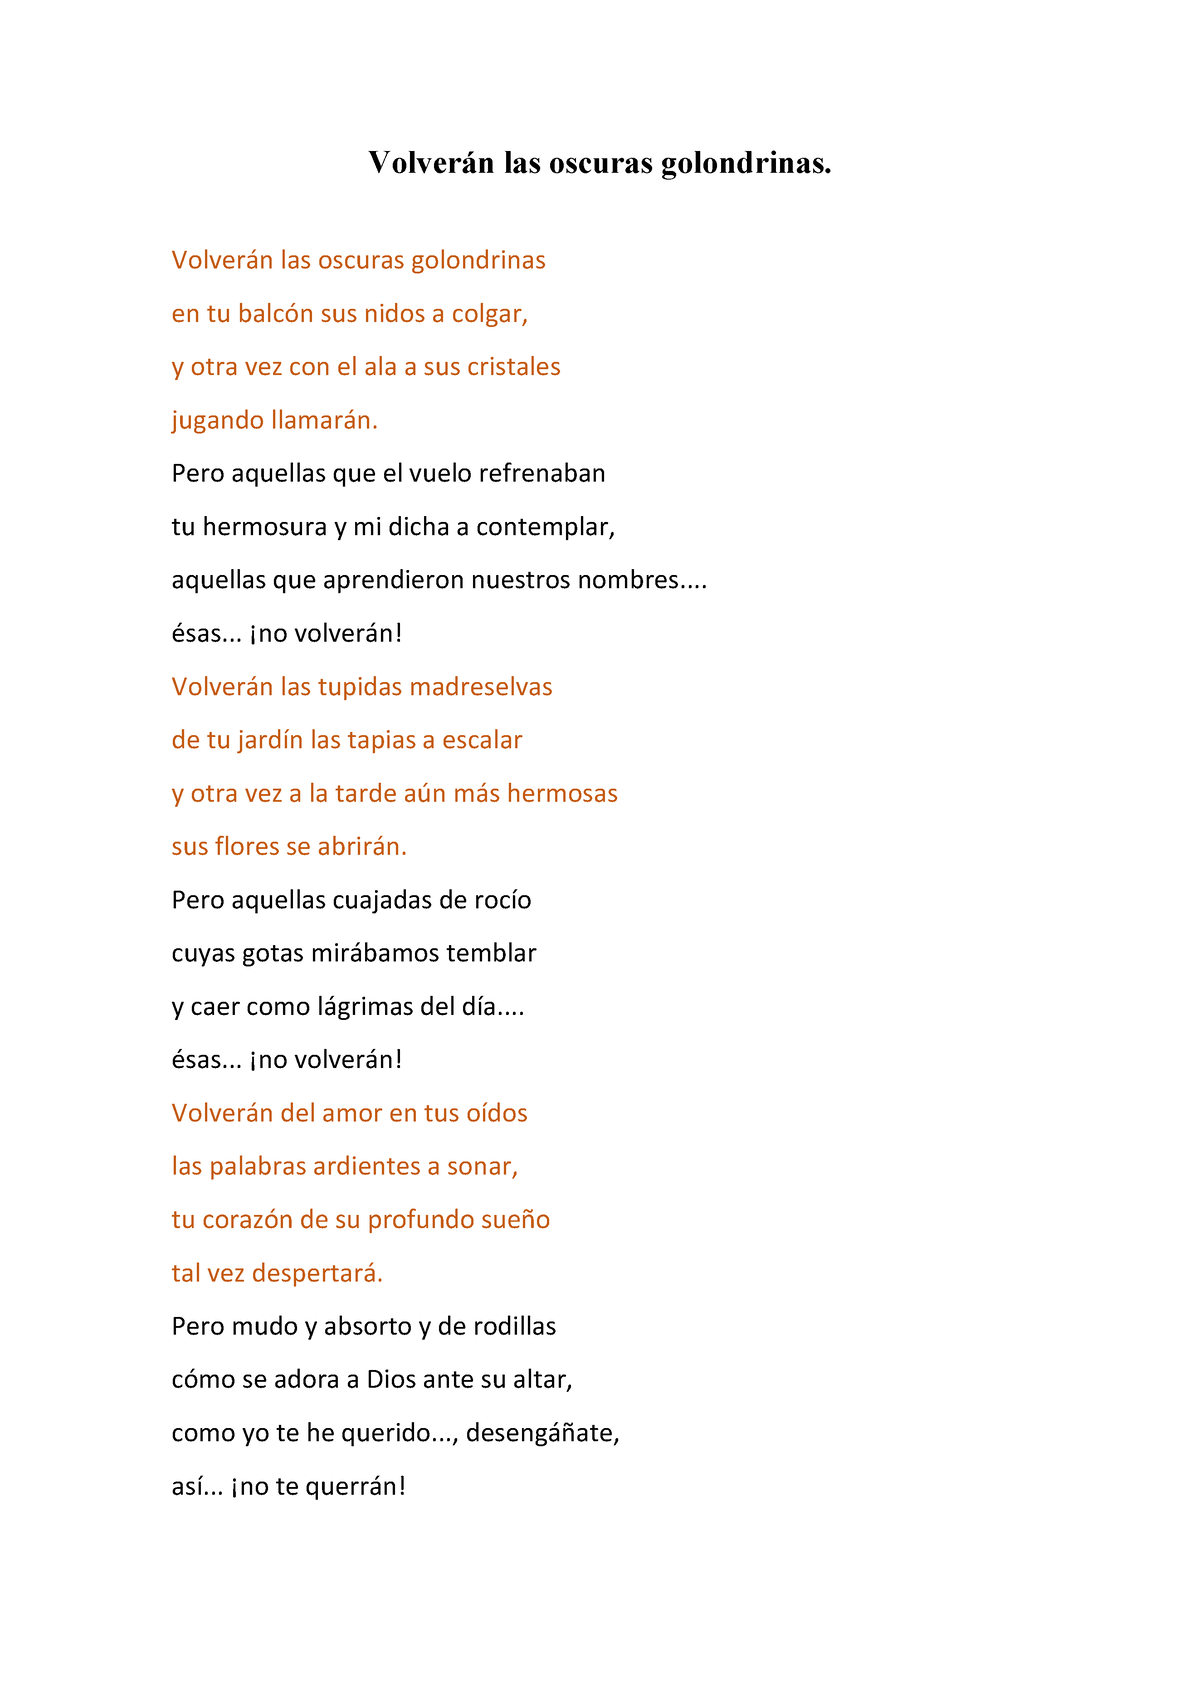 Descarga gratis: Volverán las Oscuras Golondrinas Poema en PDF